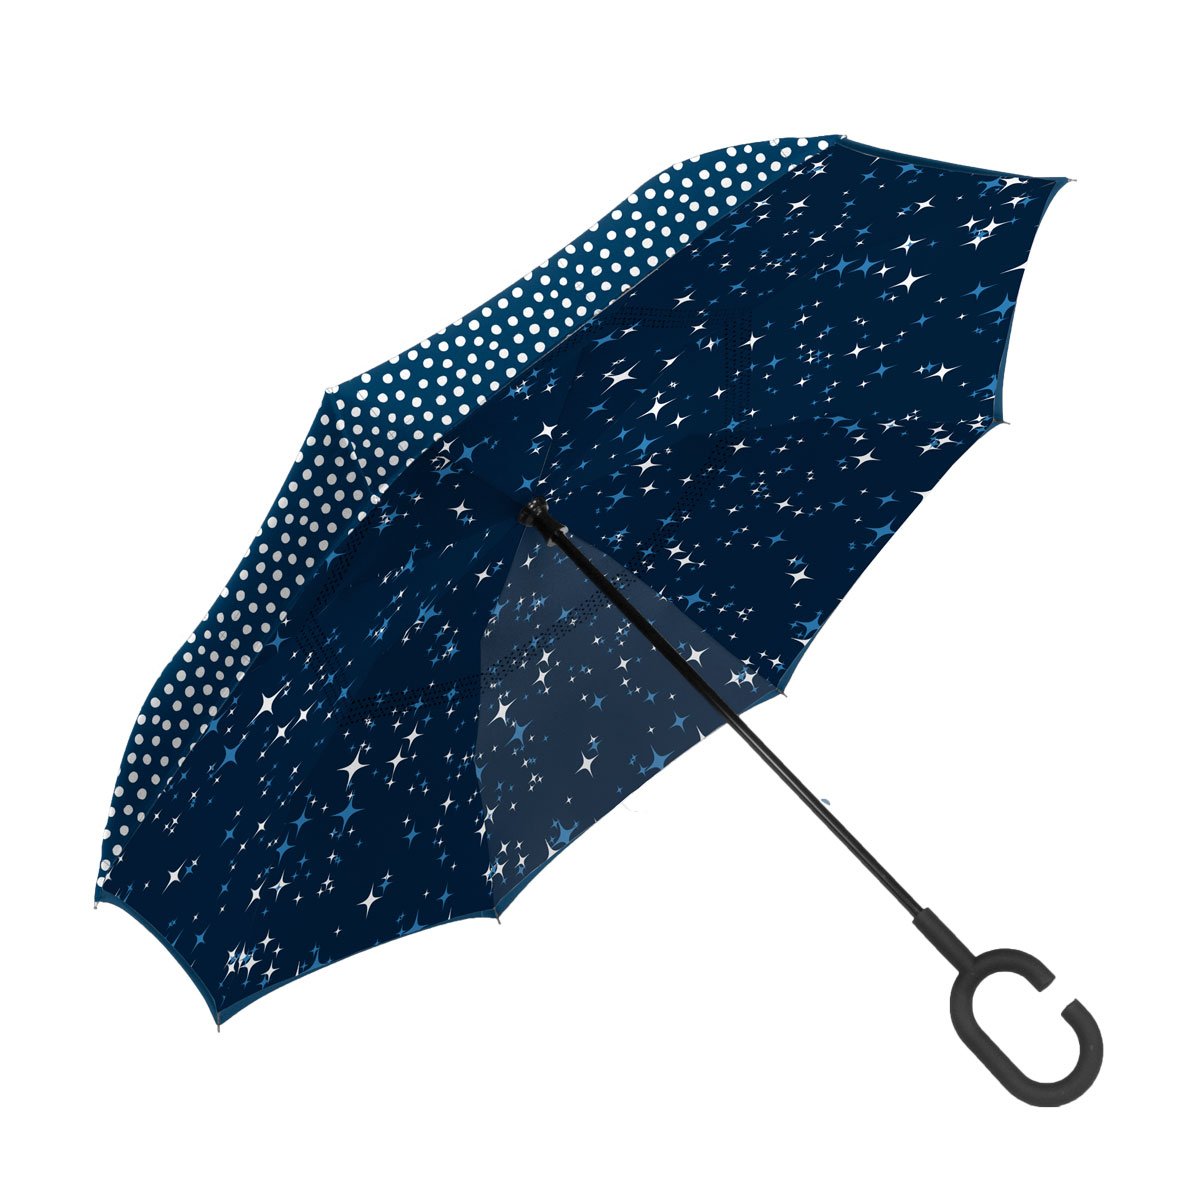 UnbelievaBrella Reverse Closing Umbrella - QUINCY/ASTRONOMY   091806242718